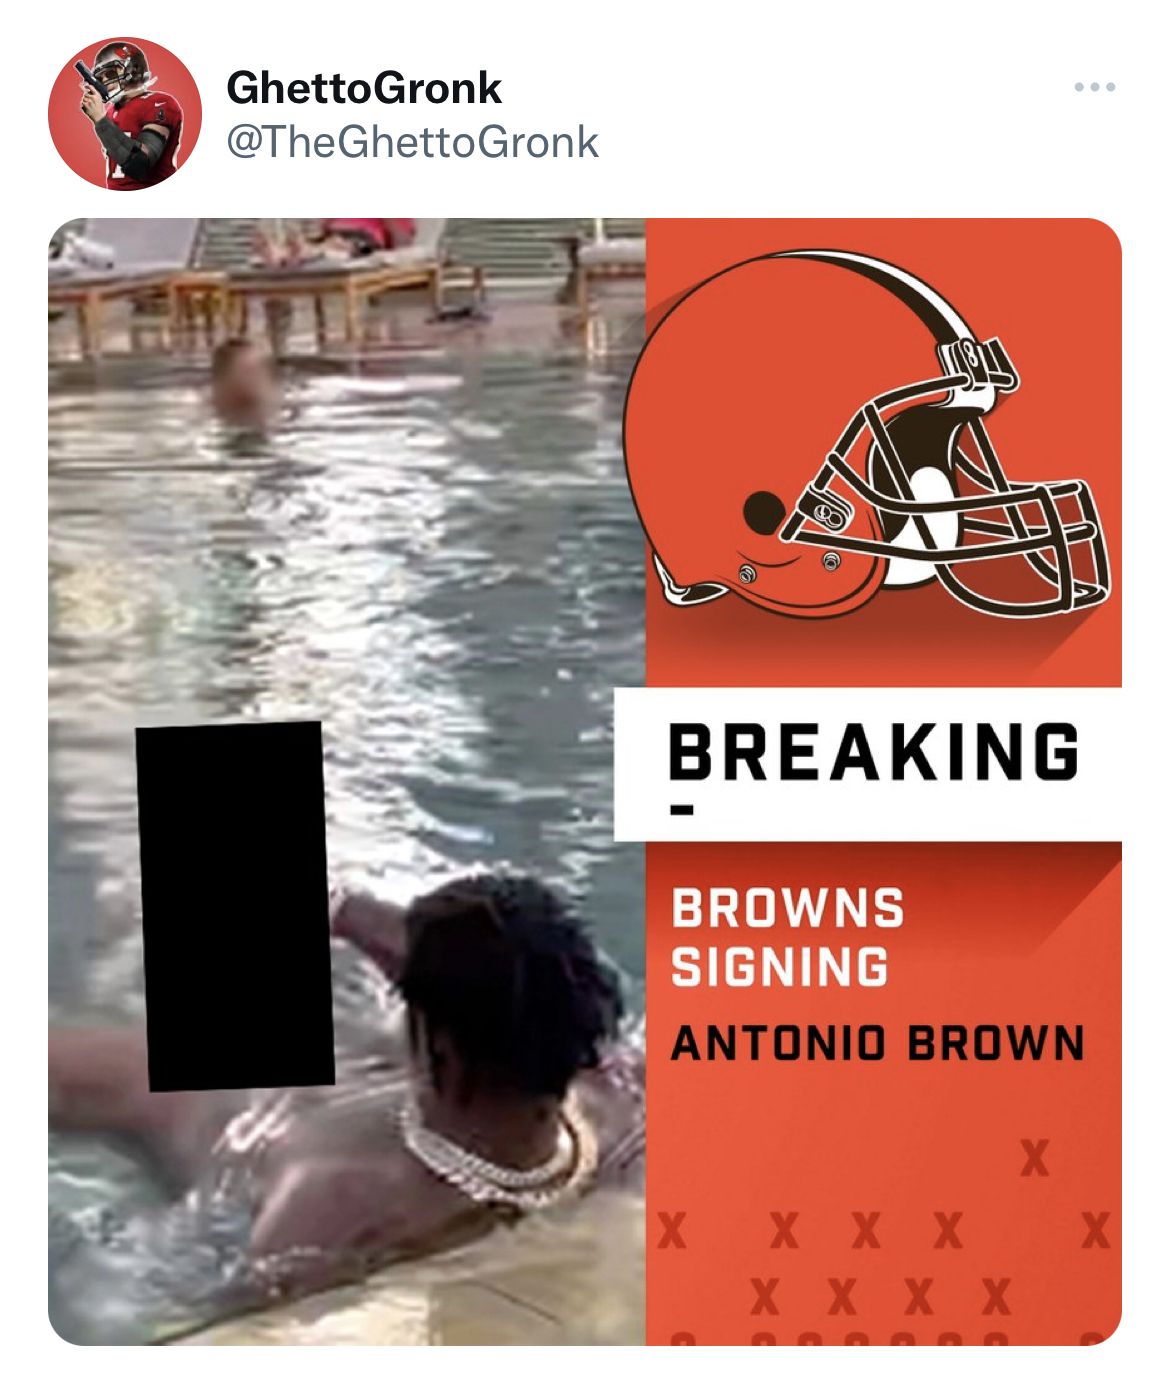 nfl memes - bengals helmet - GhettoGronk Gronk Breaking Browns Signing Antonio Brown |x x x x E Xxxx X